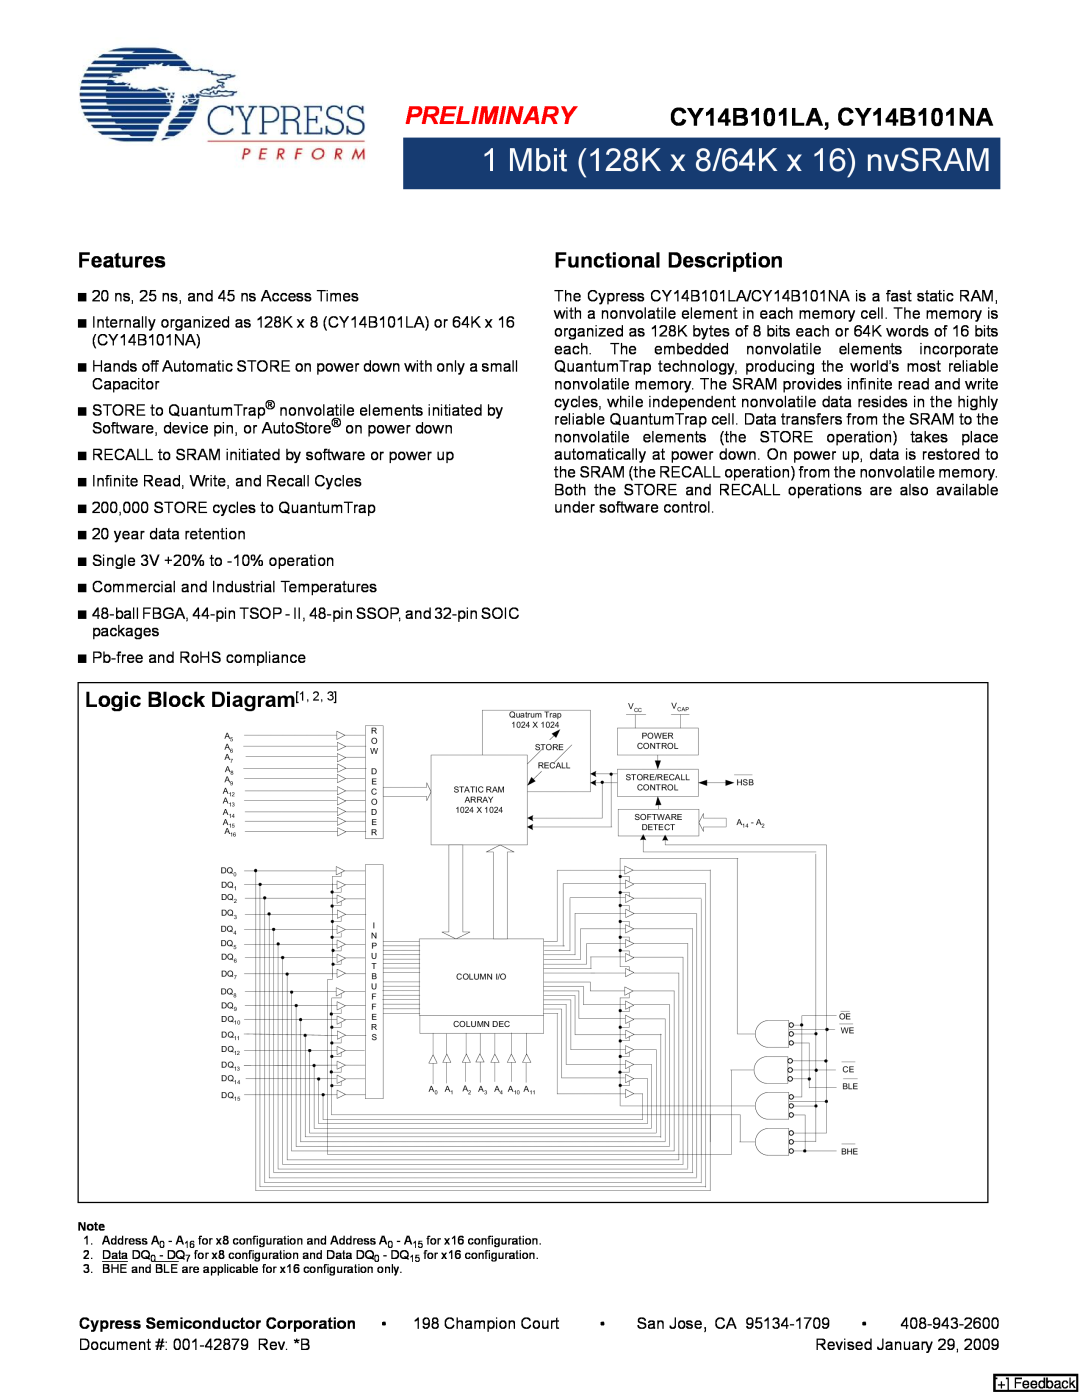 Cypress manual PRELIMINARY CY14B101LA, CY14B101NA, Features, Functional Description, Logic Block Diagram1, 2 